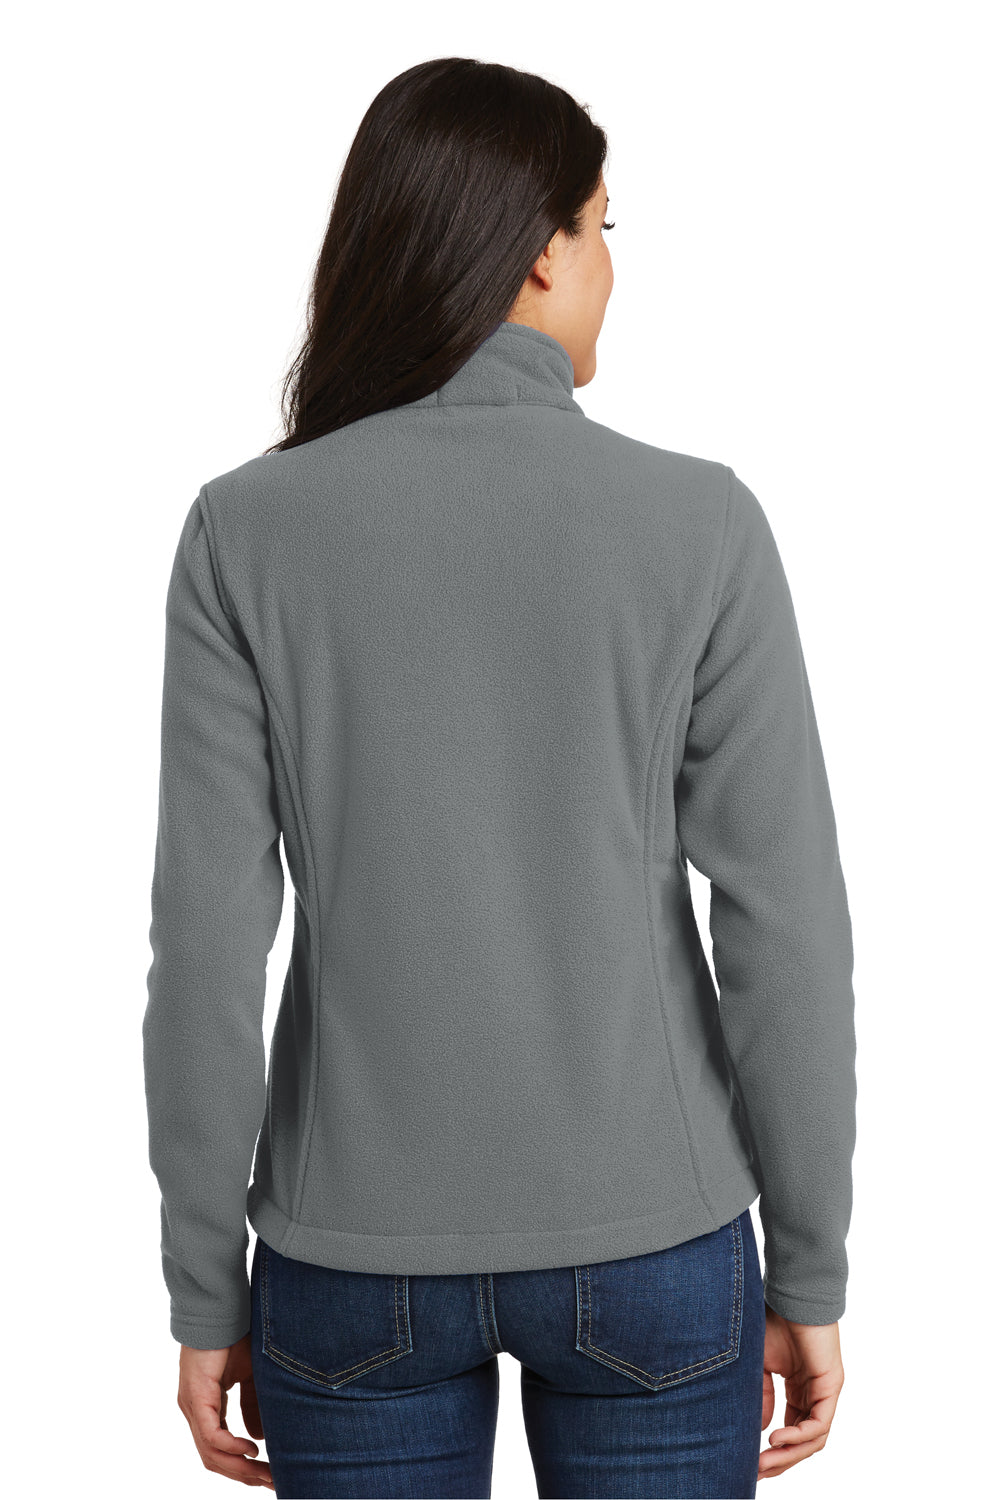 Port Authority L217 Womens Full Zip Fleece Jacket Smoke Grey Back